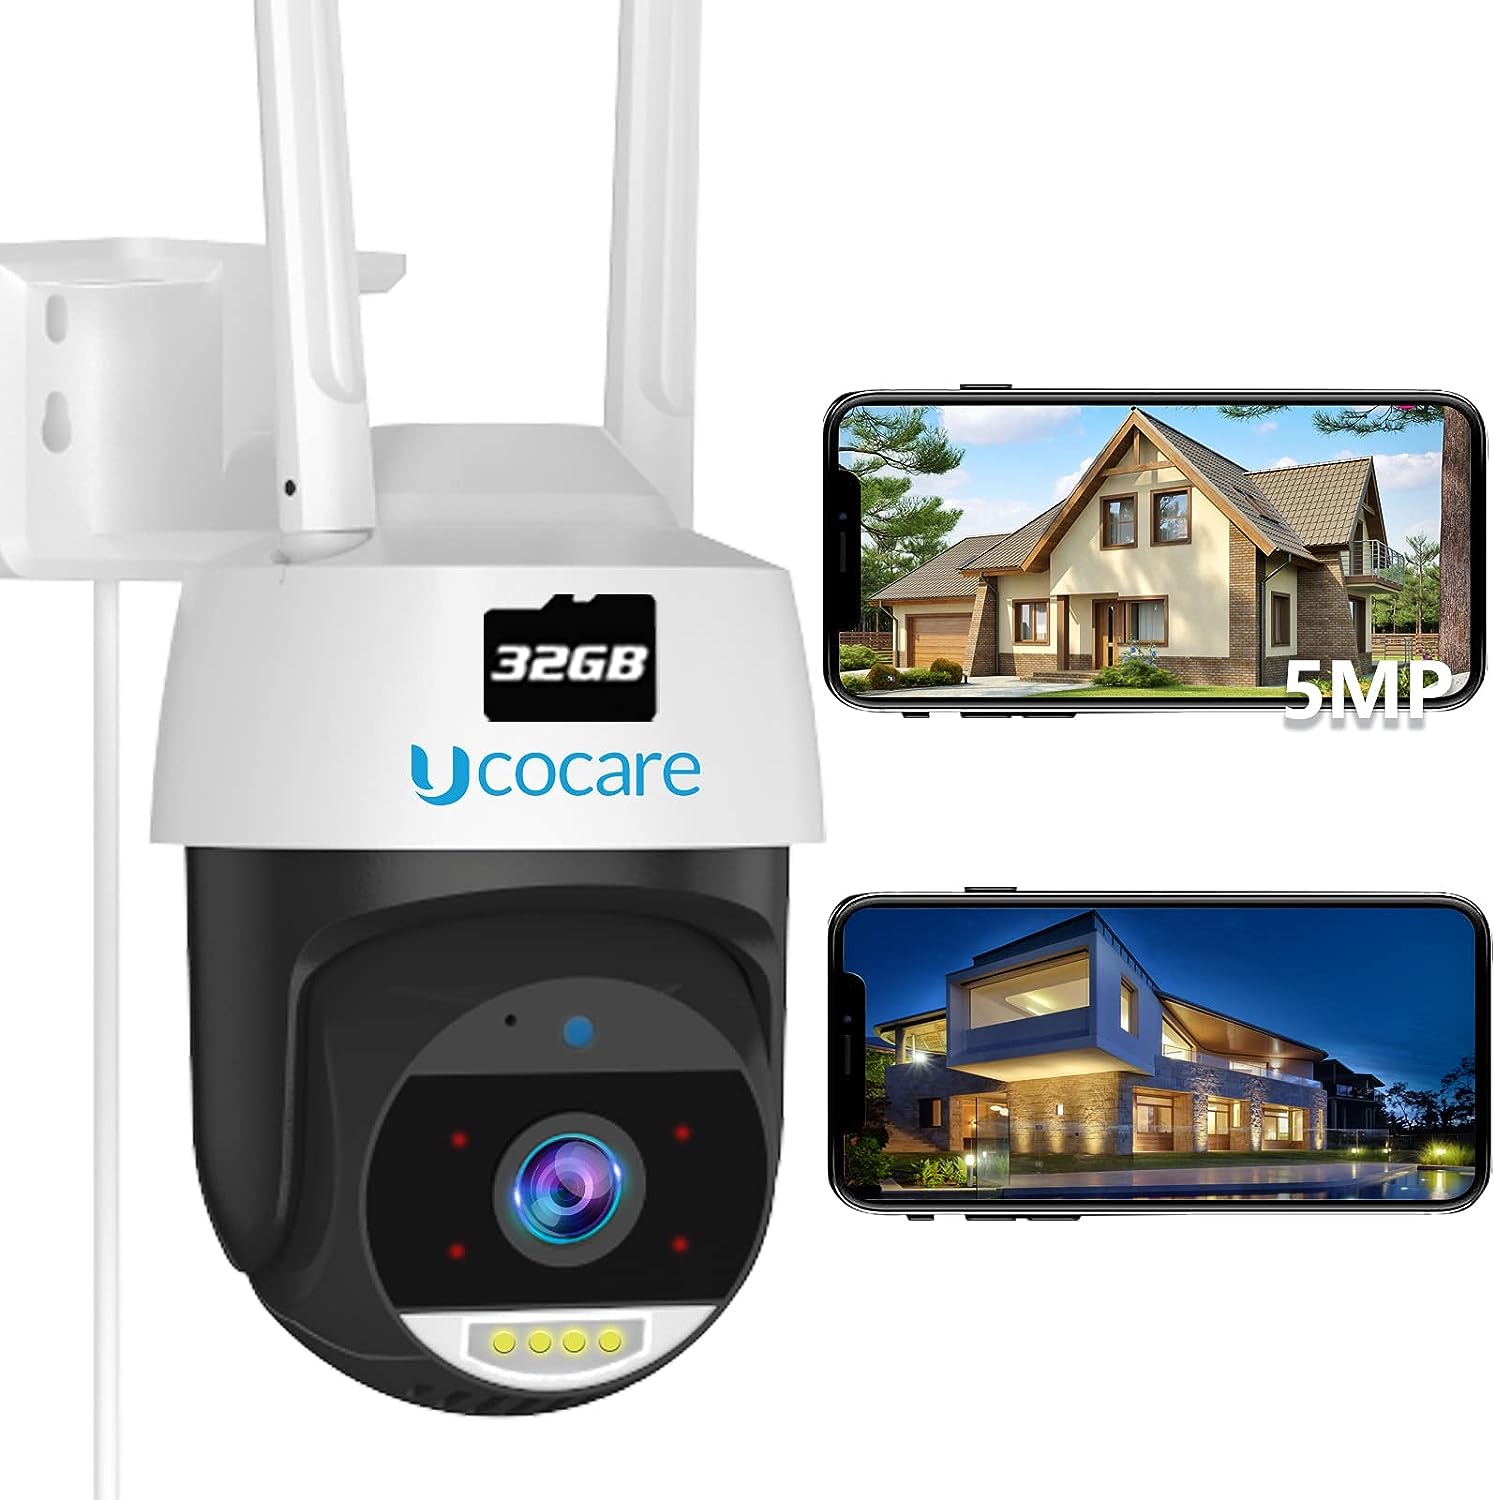 outdoor security camera 5MP